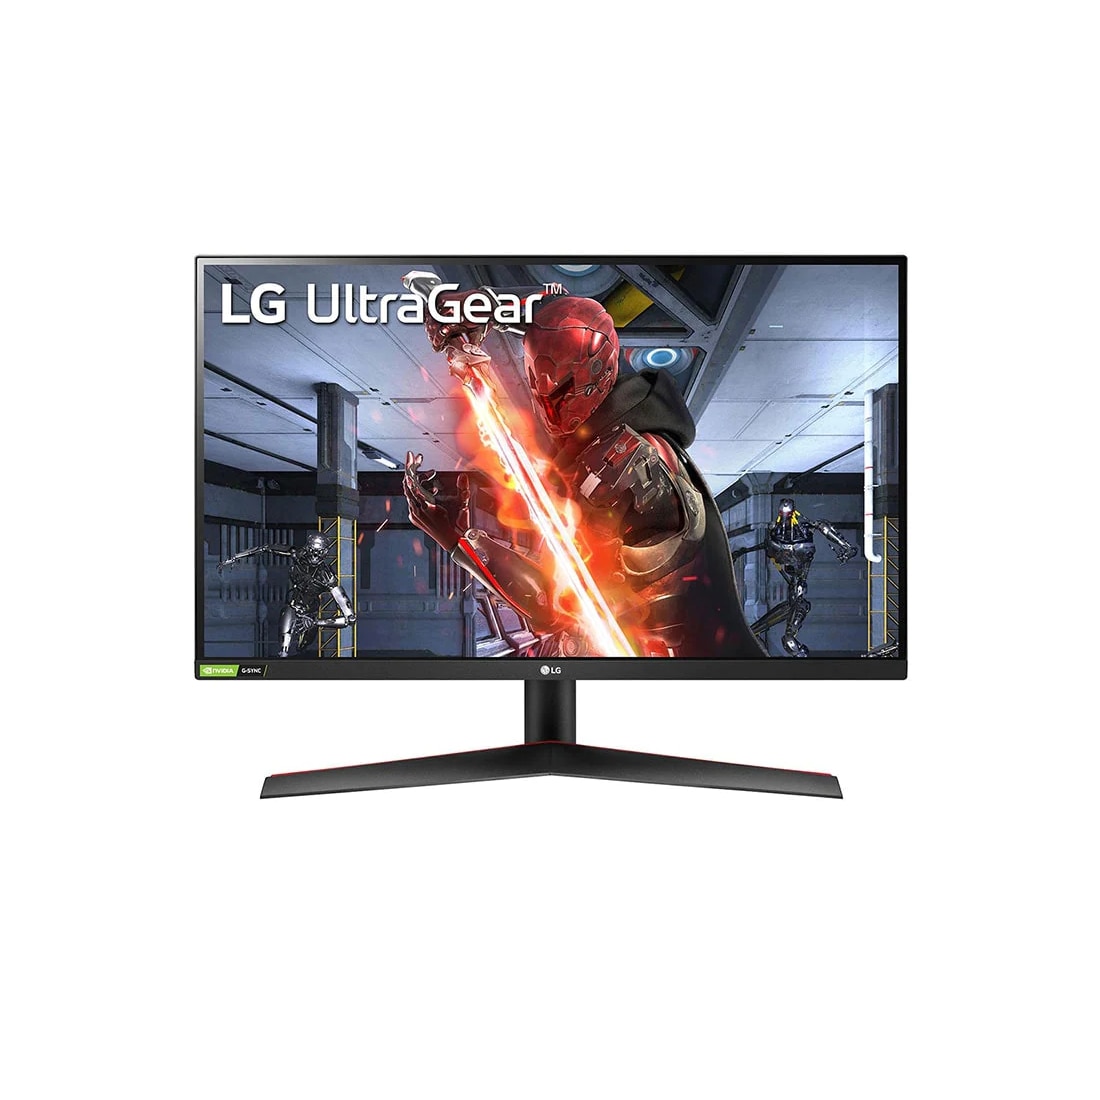 LG Full HD IPS Monitor 80 cm (31.5 Inches), 1920 x 1080, 5ms (GtG), 75Hz,  AMD FreeSync™, OnScreen Control, Reader Mode, DP, HDMI, D-Sub, Headphone